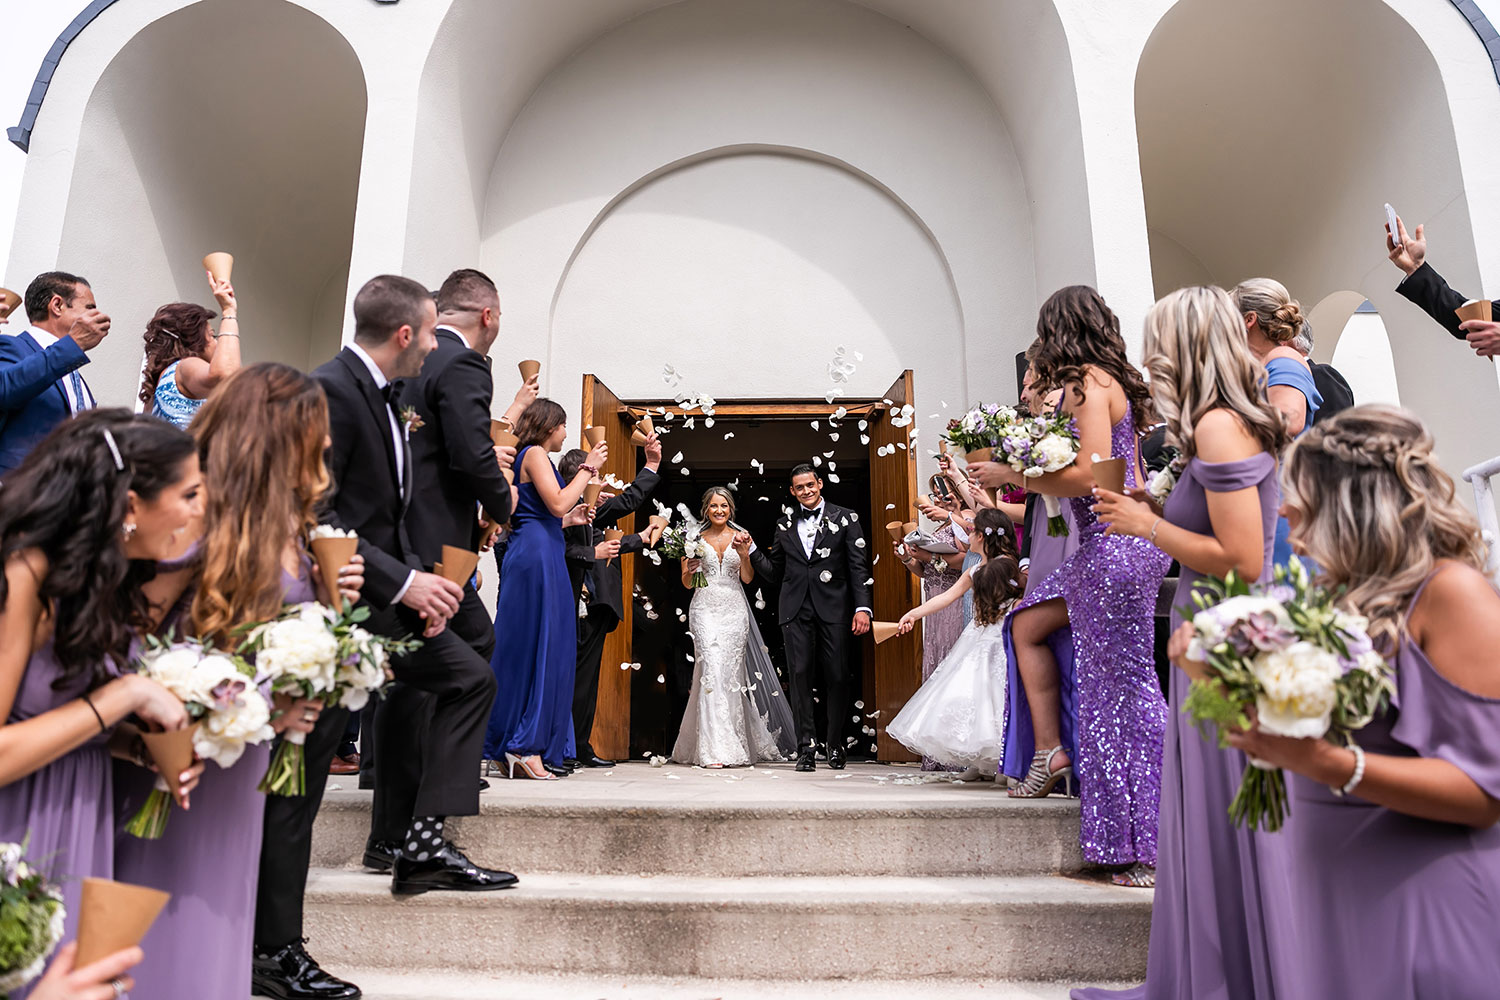 Greek wedding video